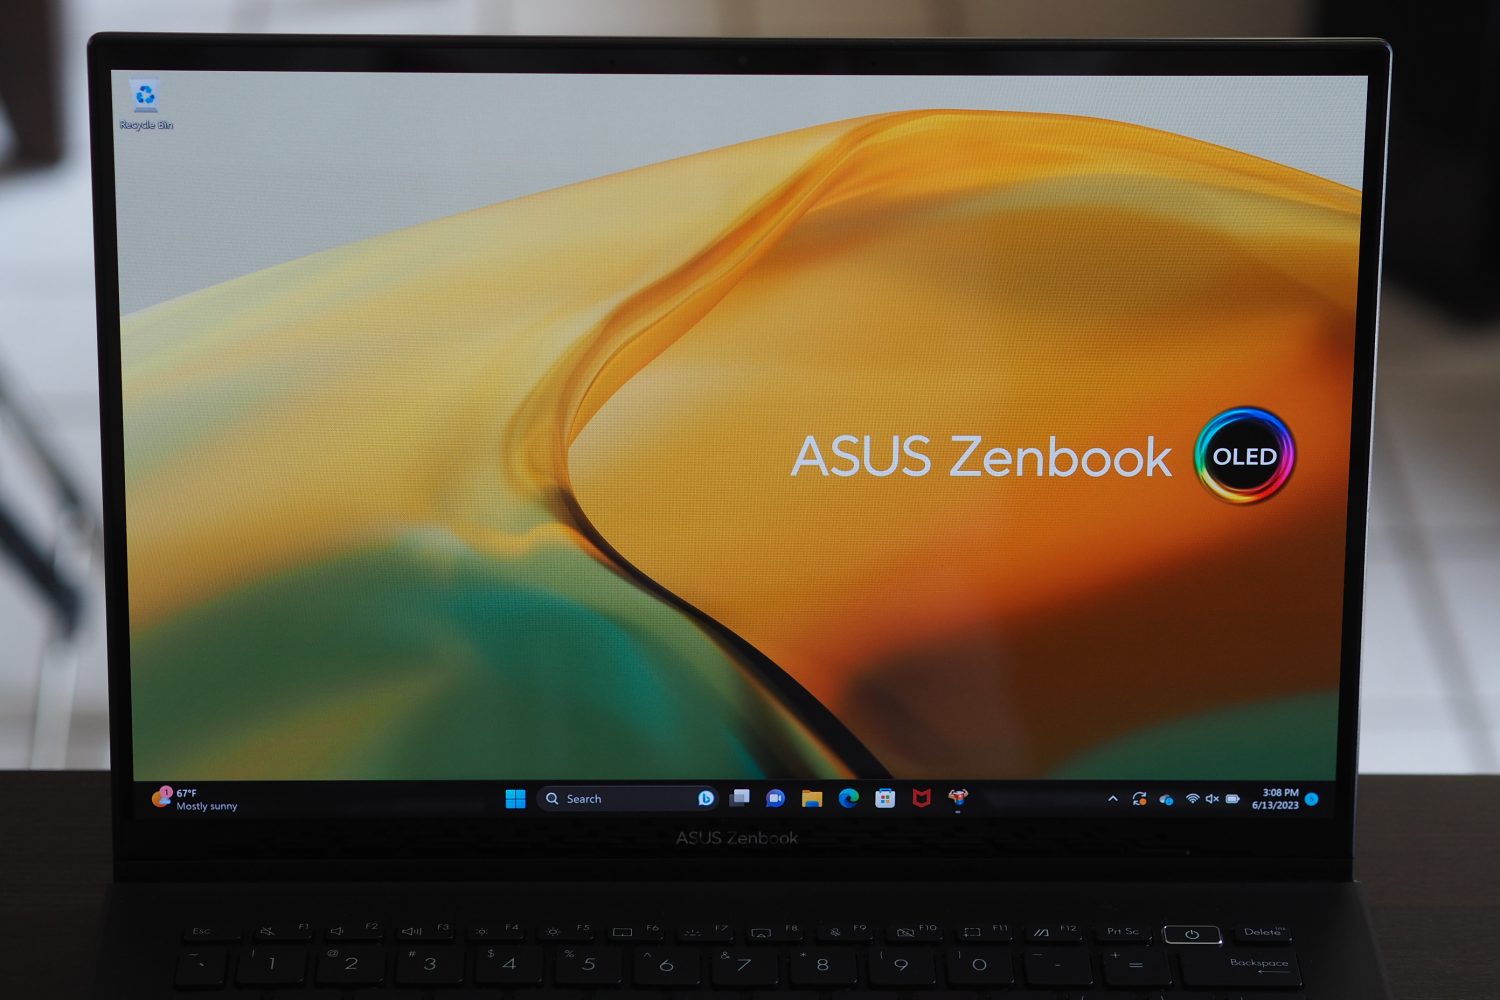 Vista frontal do Asus Zenbook 14 OLED mostrando a tela.